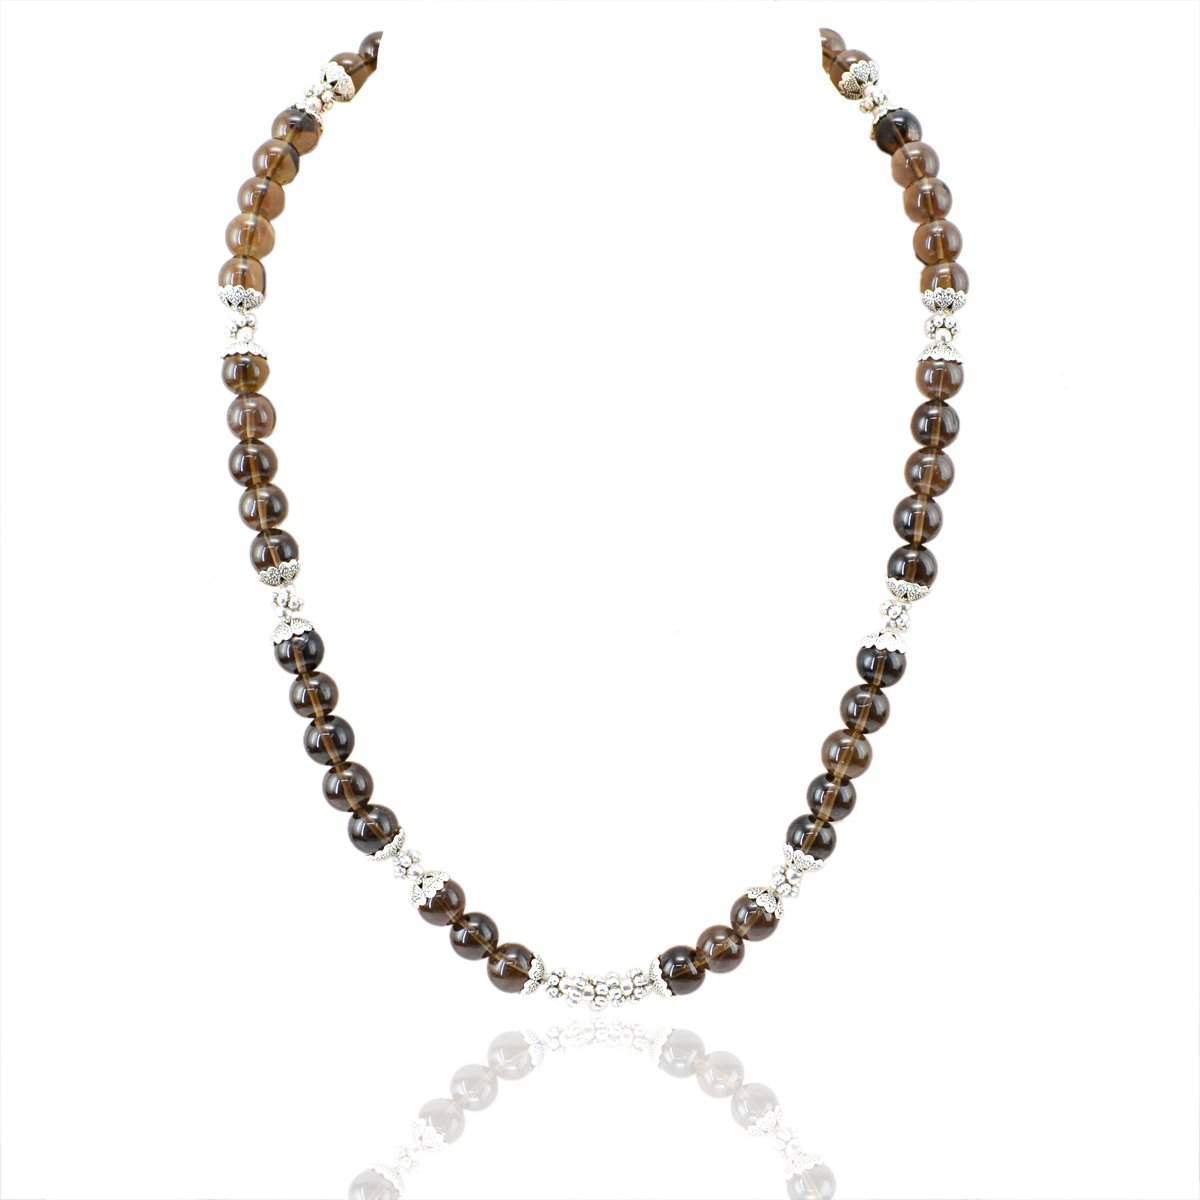 gemsmore:Natural Untreated Smoky Quartz Necklace Round Shape Beads